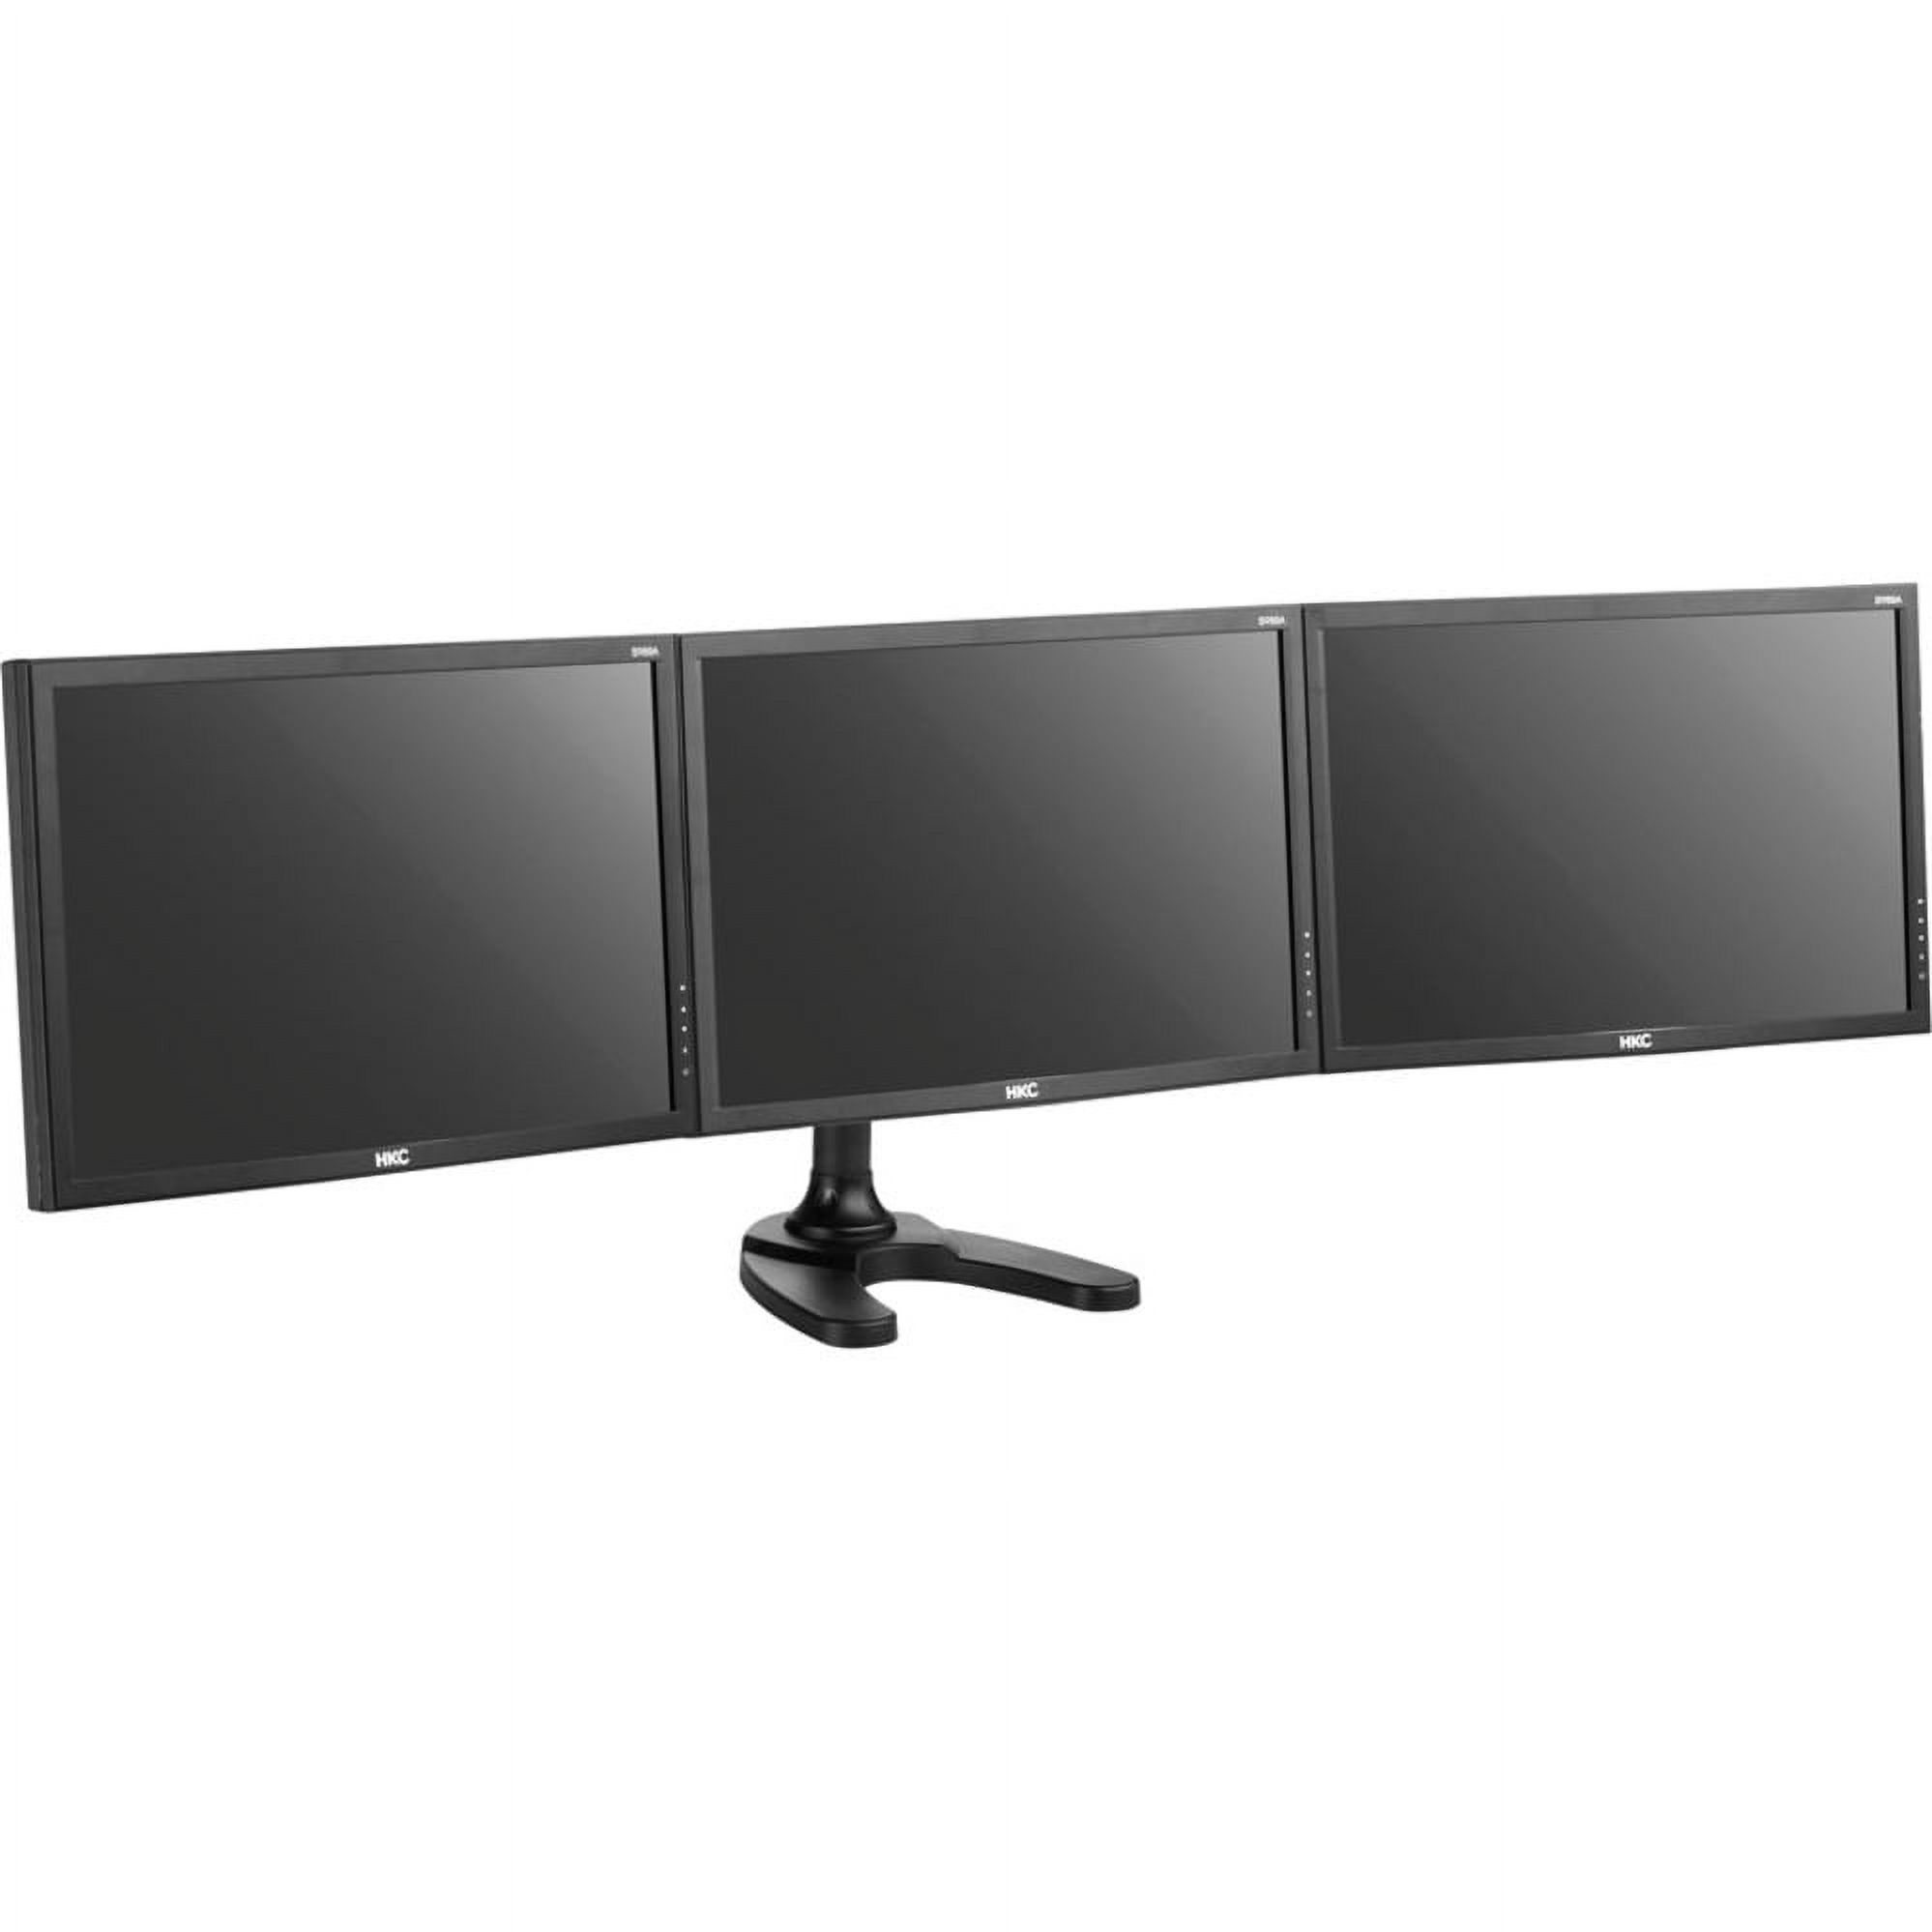 Atdec triple monitor desk mount with a freestanding base, Loads up to 17.6lb, VESA 75x75, 100x100 - image 4 of 10